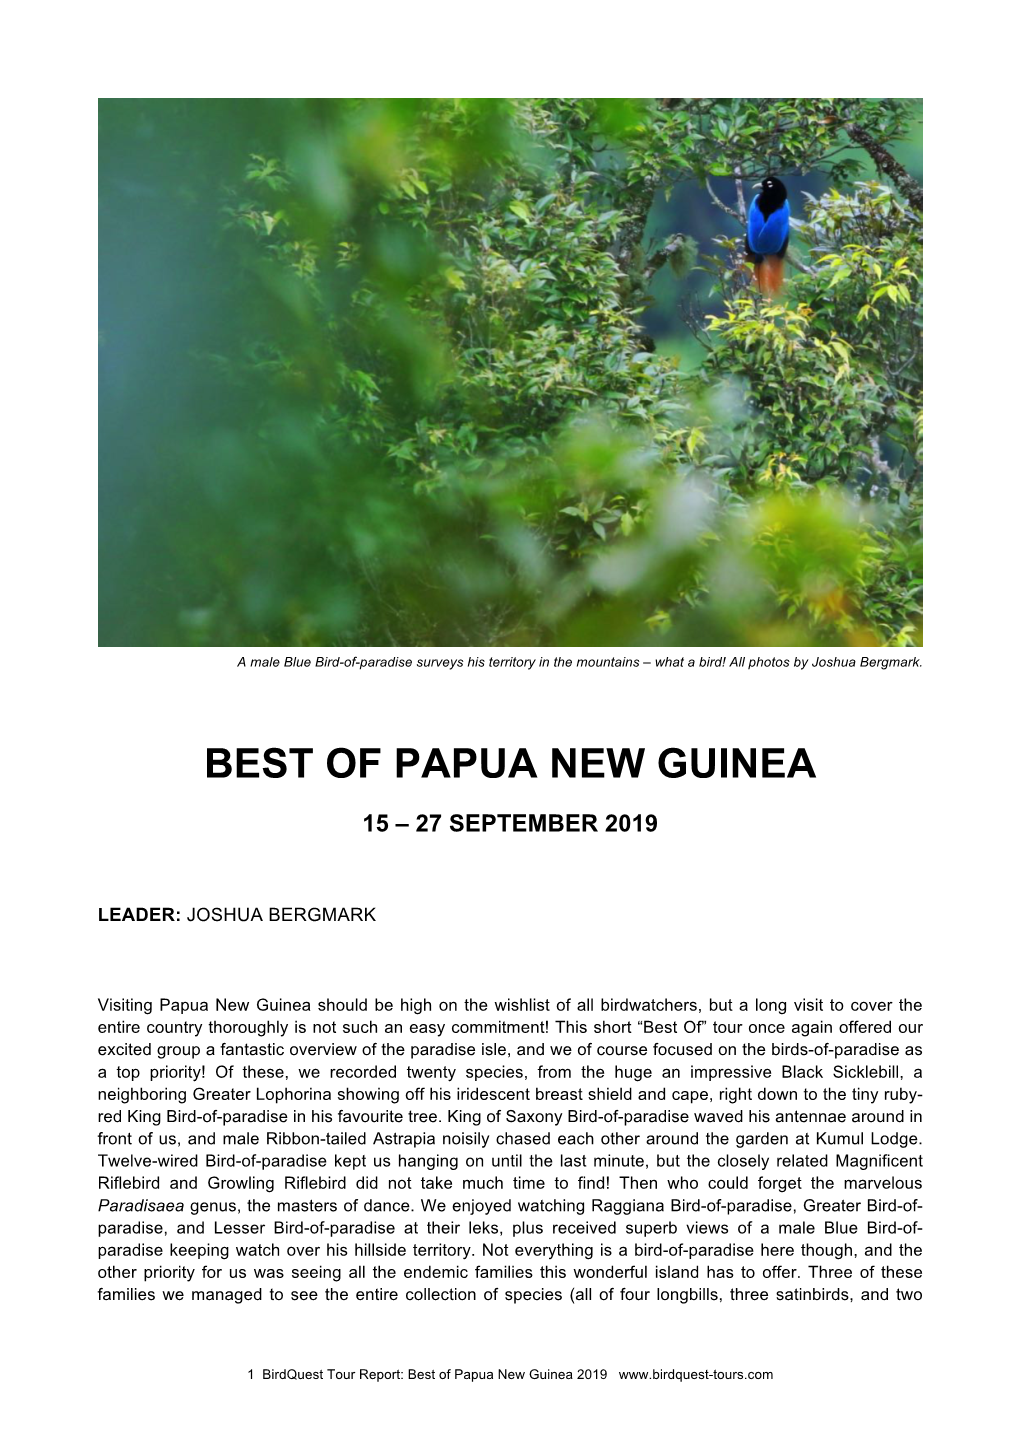 Best of Papua New Guinea